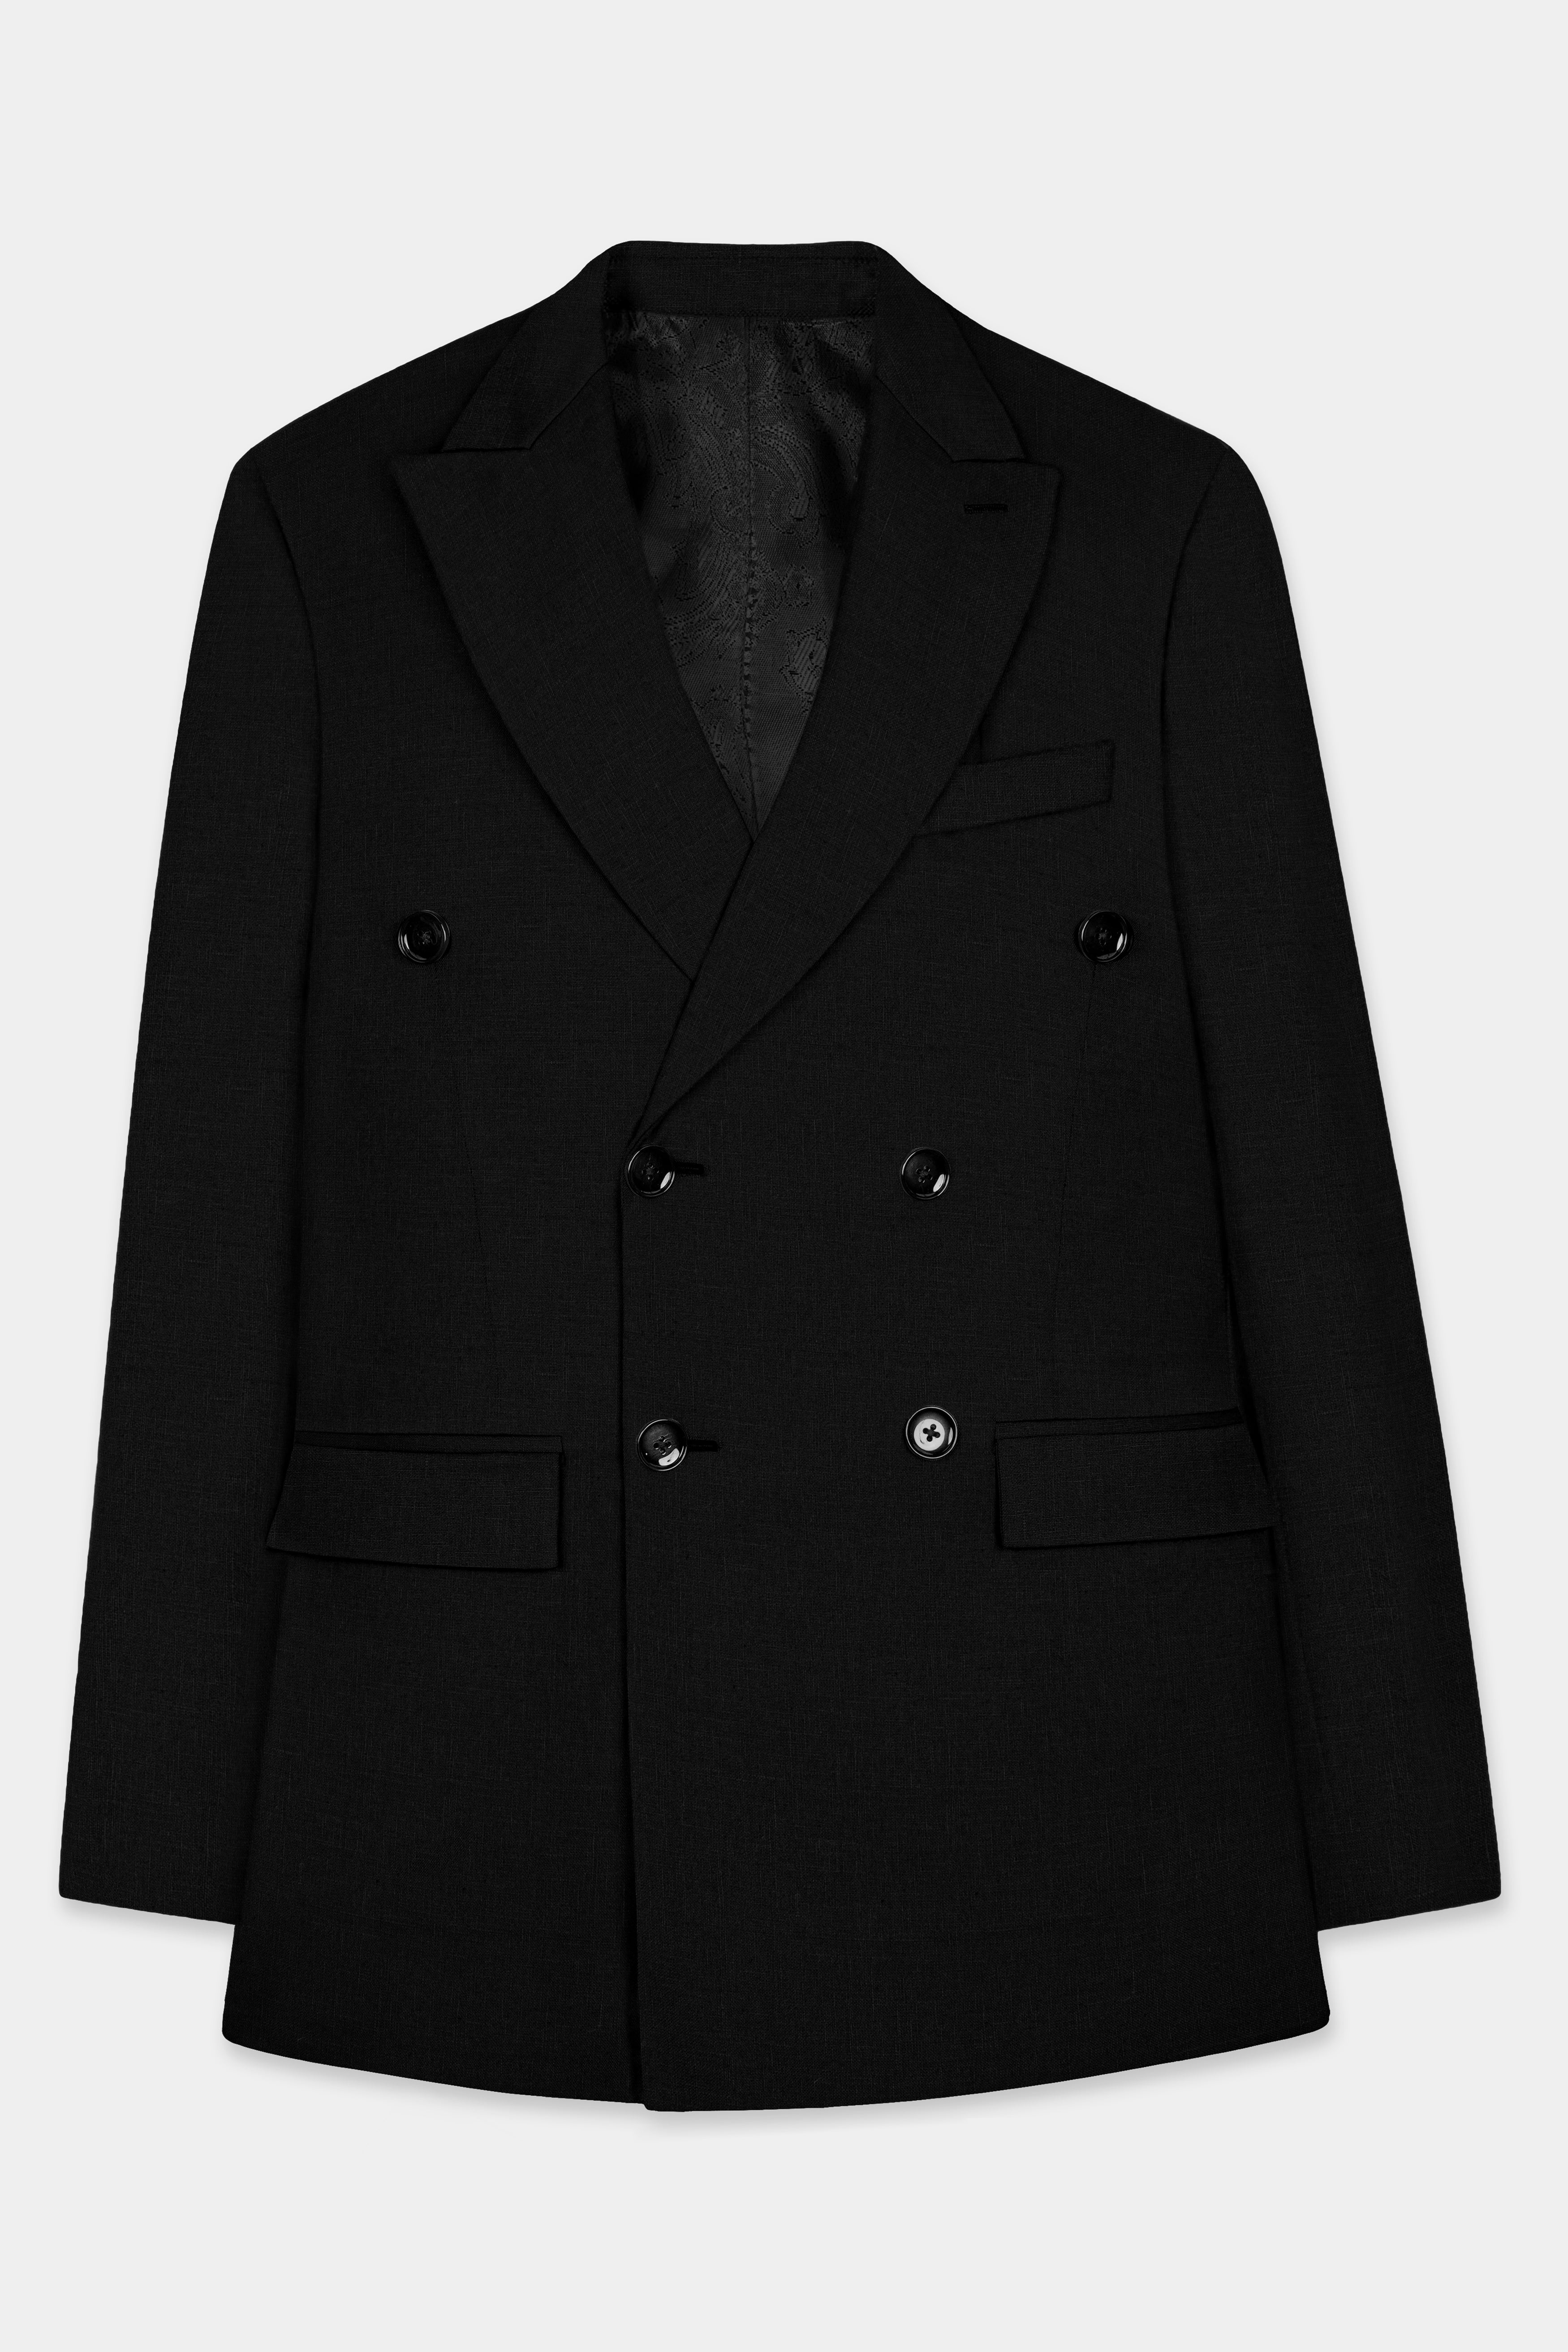 Jade Black Solid Double Breasted Tweed Suit